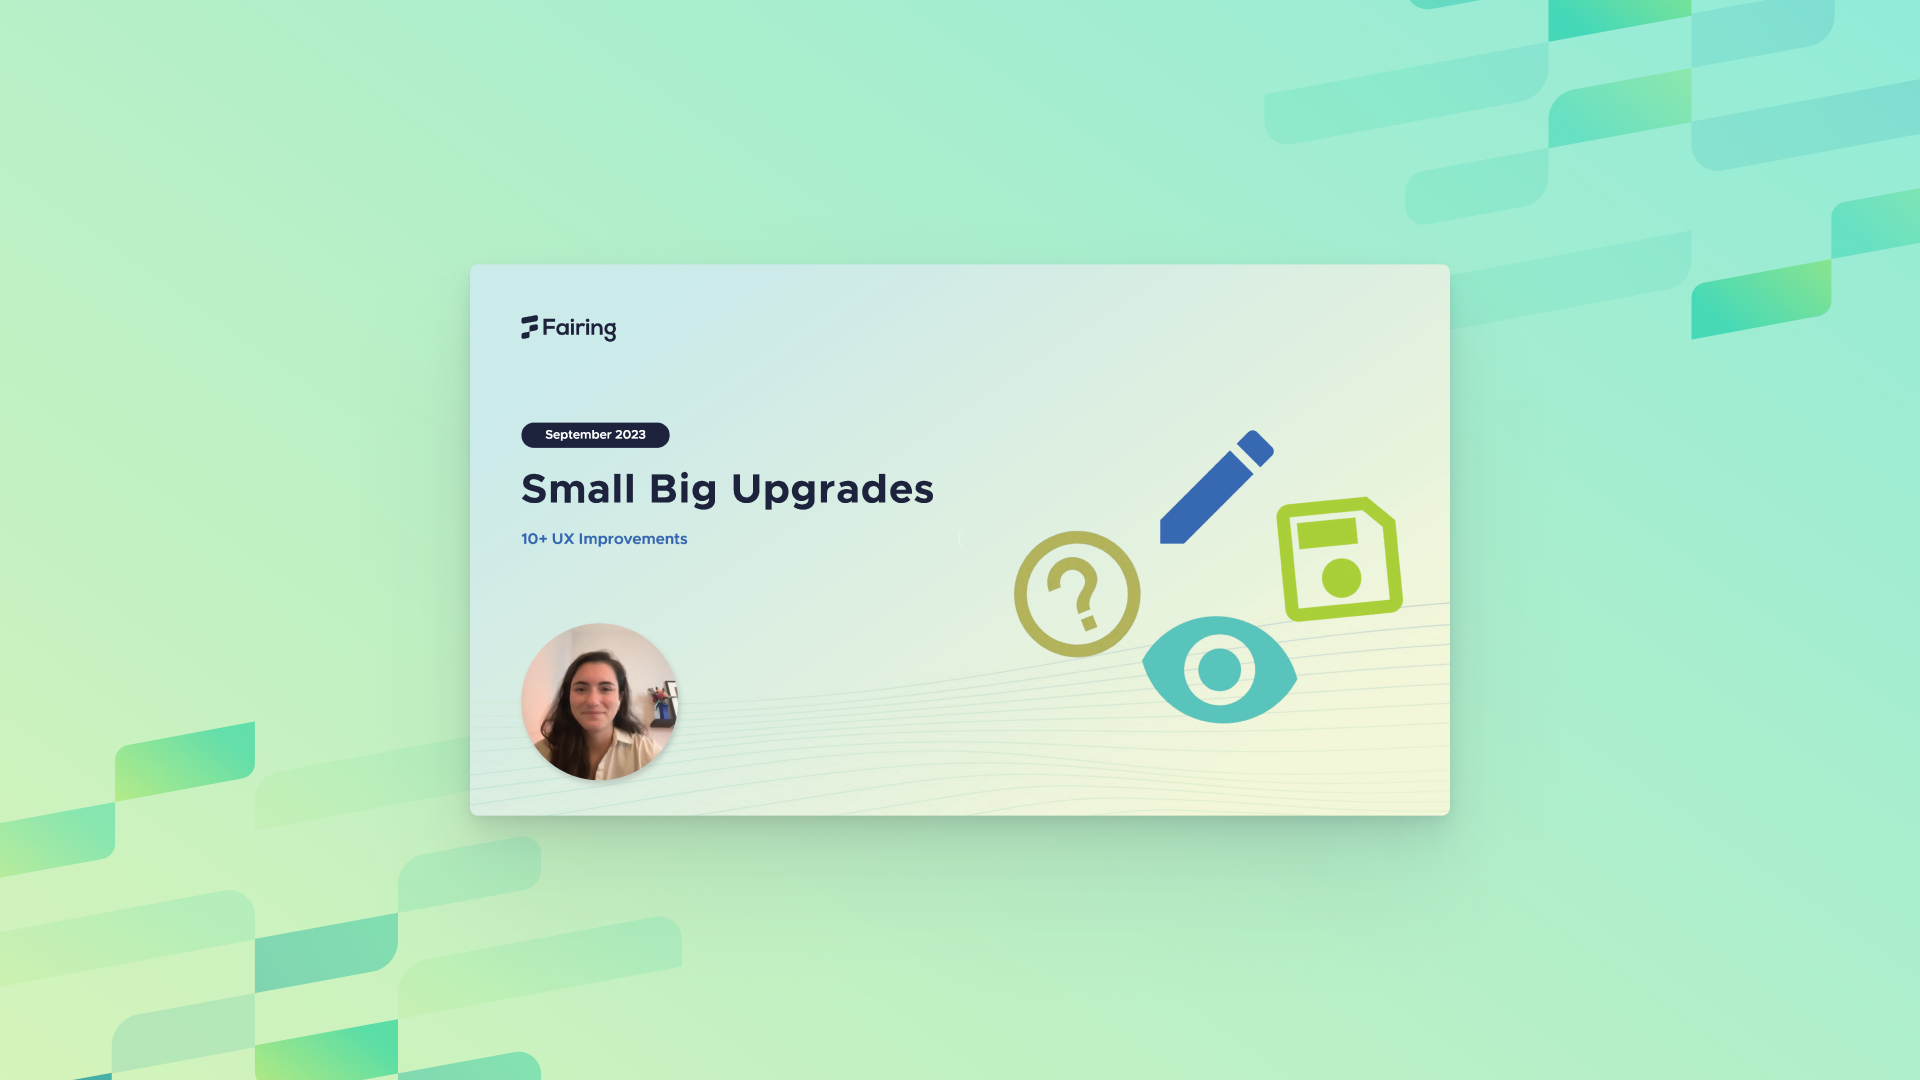 Small Big Upgrades - September '23